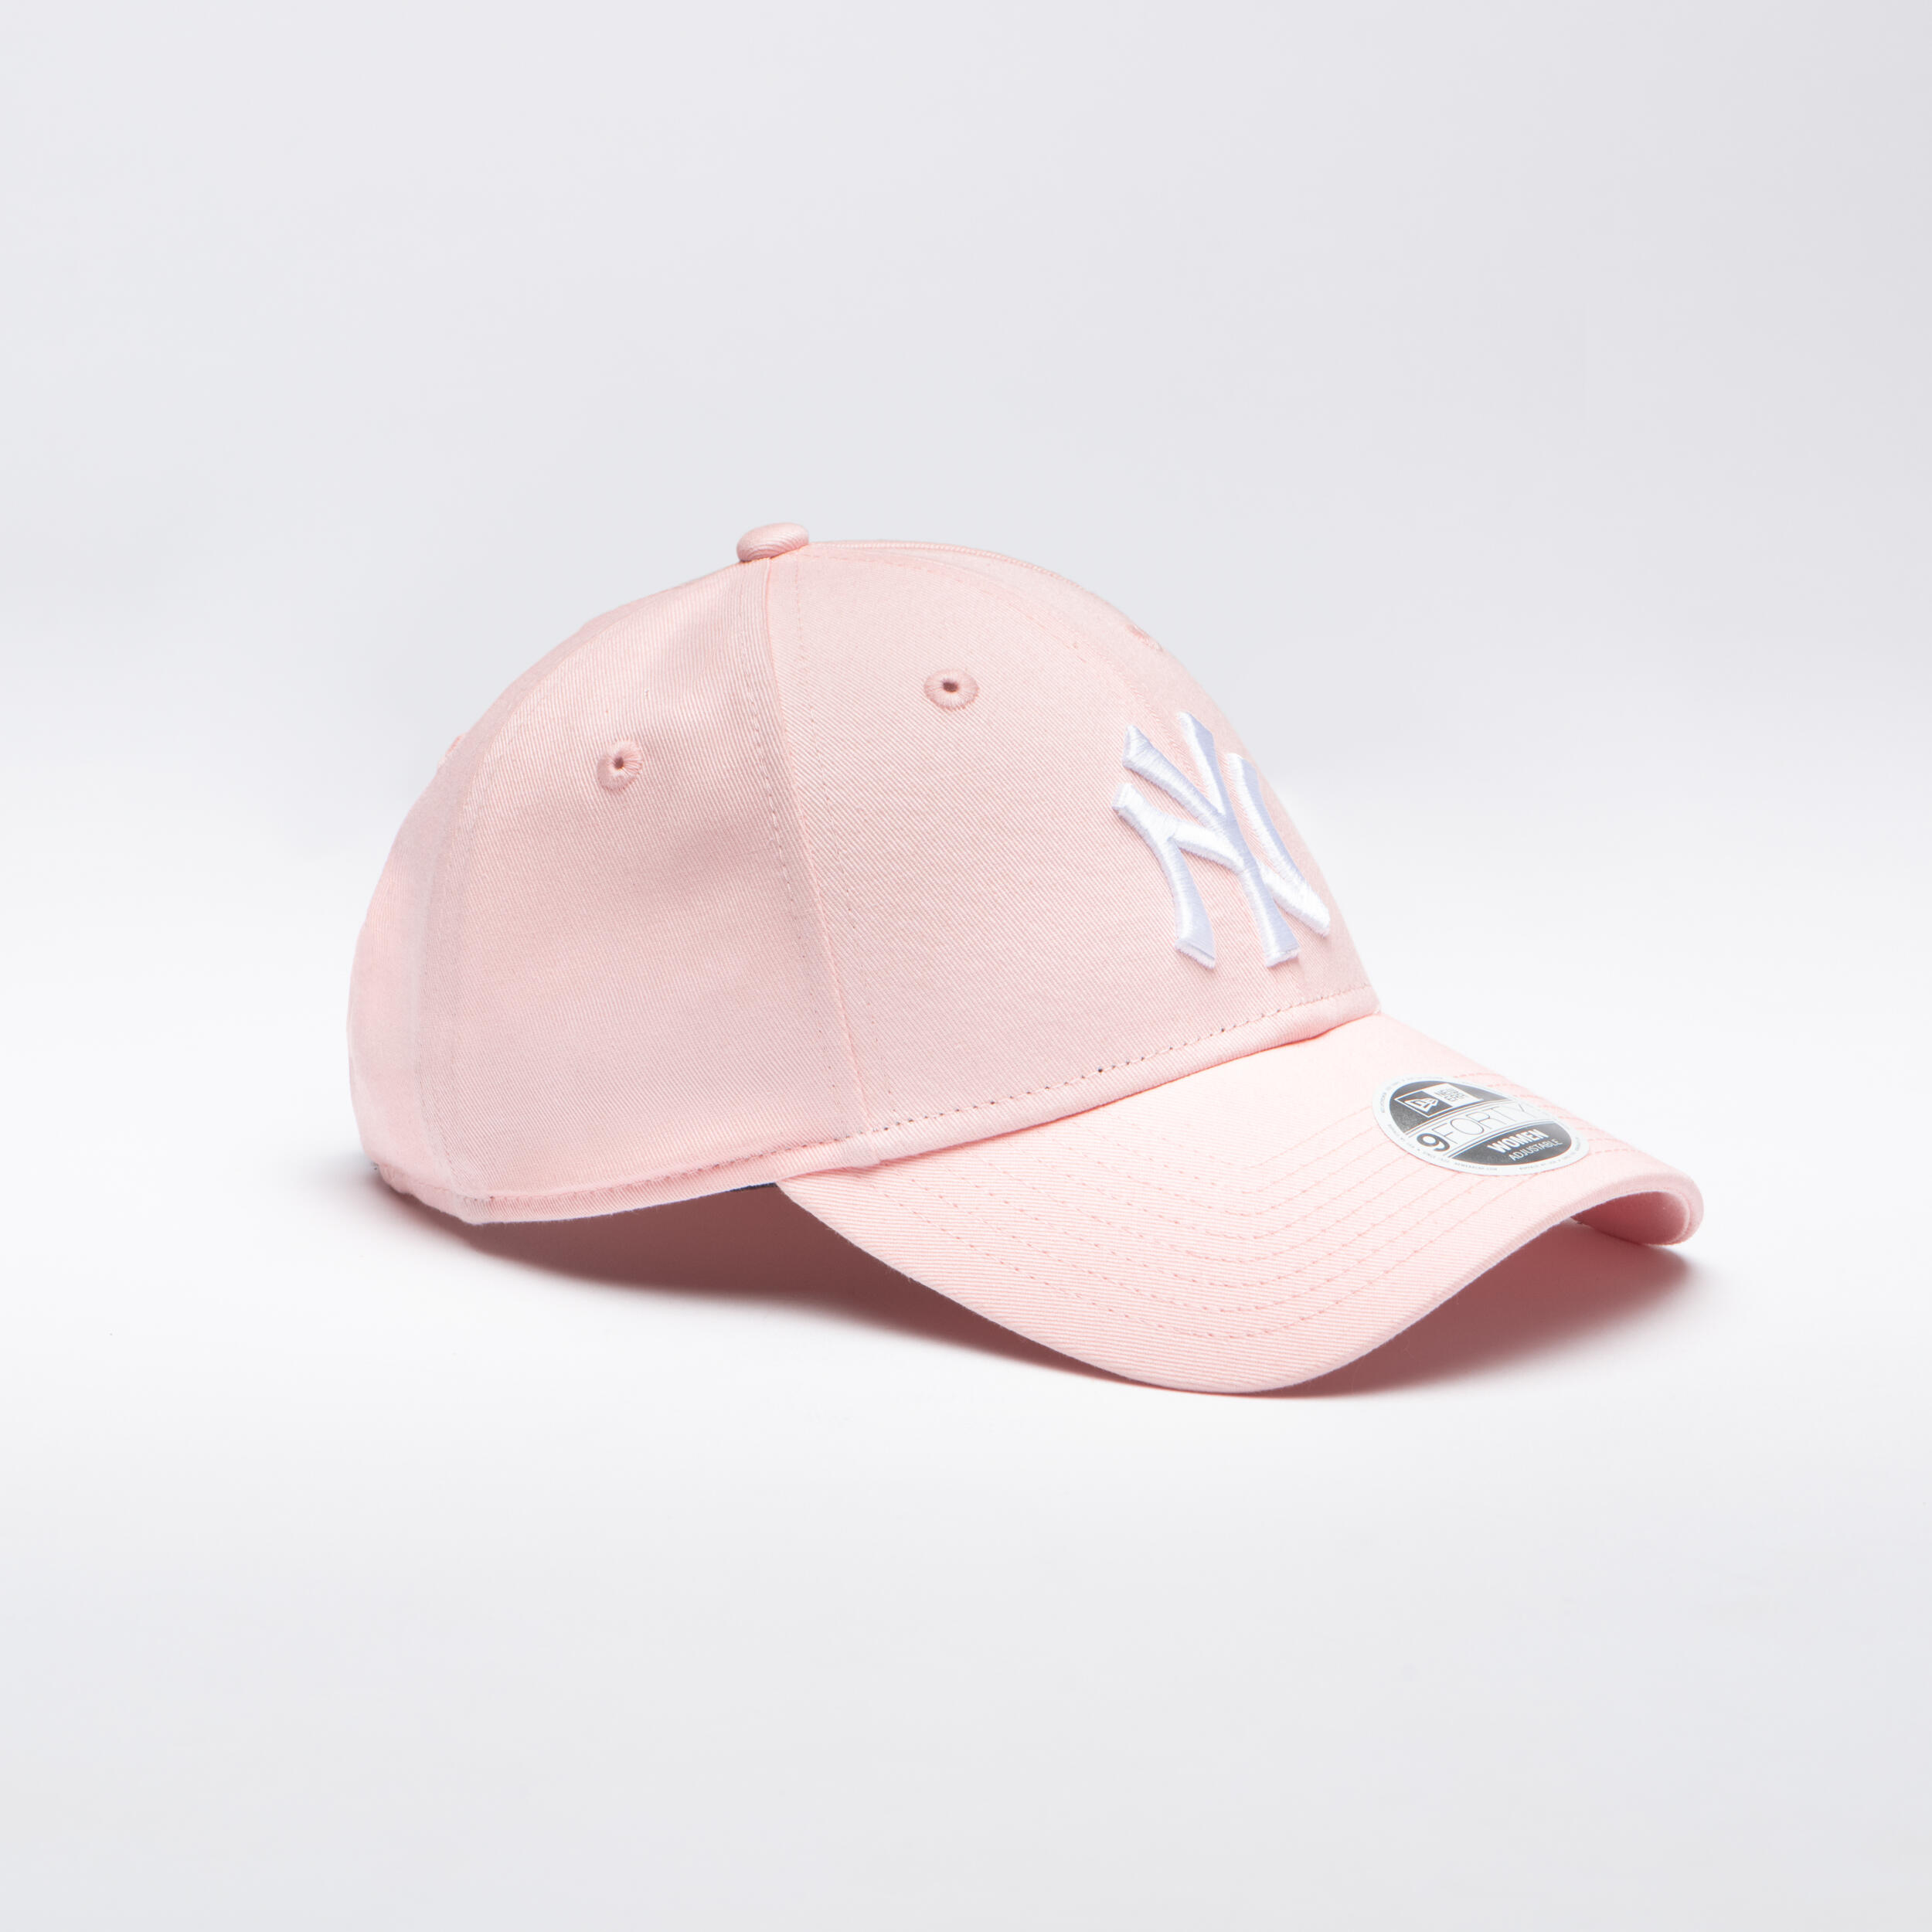 Men's / Women's MLB Baseball Cap New York Yankees - Pink 4/8